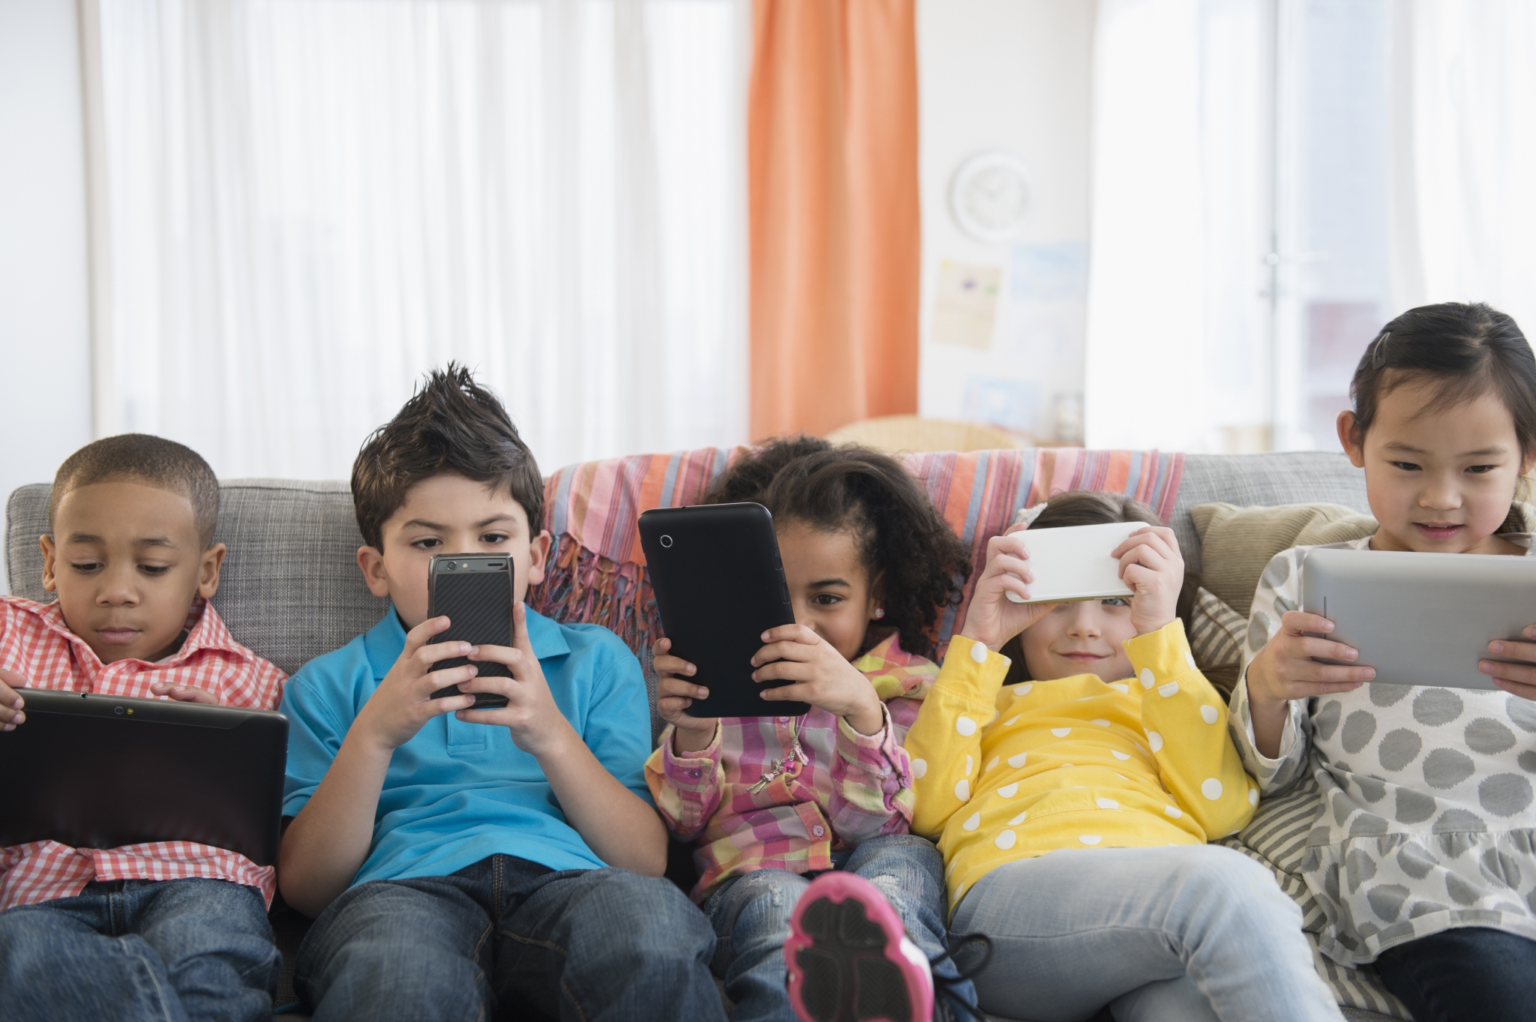 uses-of-social-media-may-harm-children